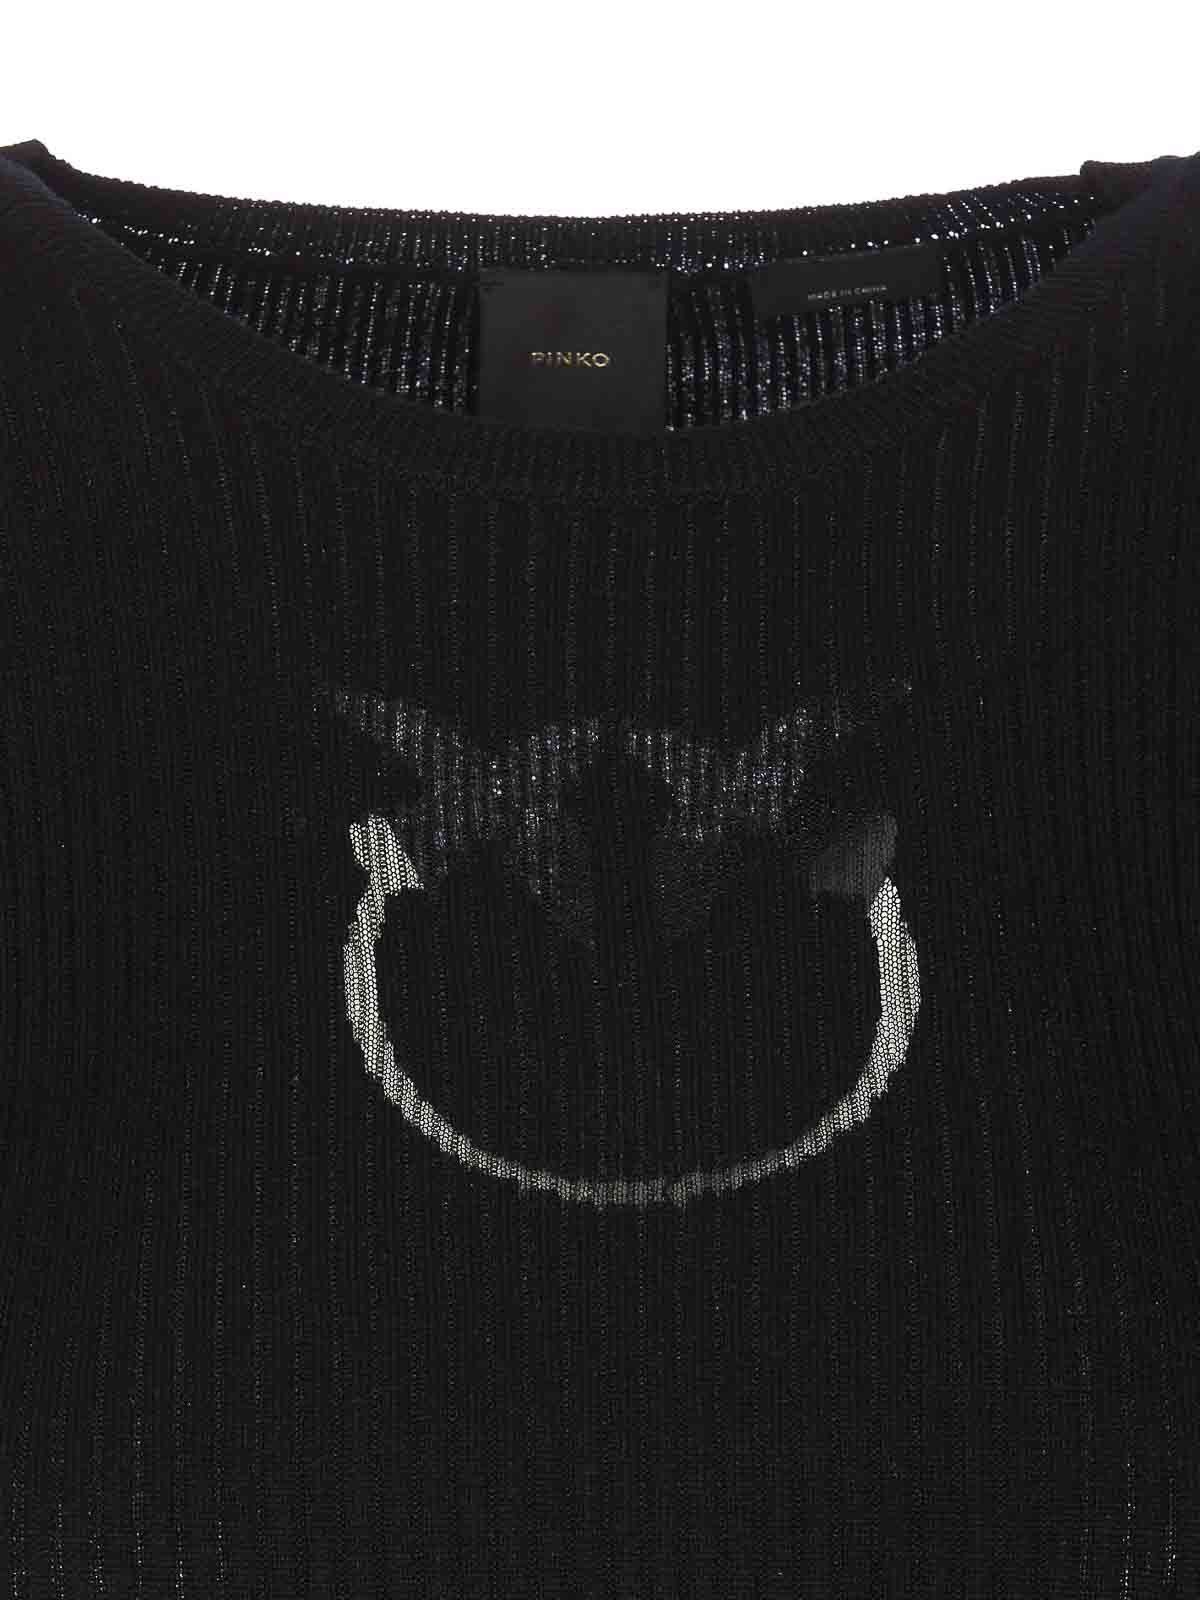 Shop Pinko Camiseta - Negro In Black